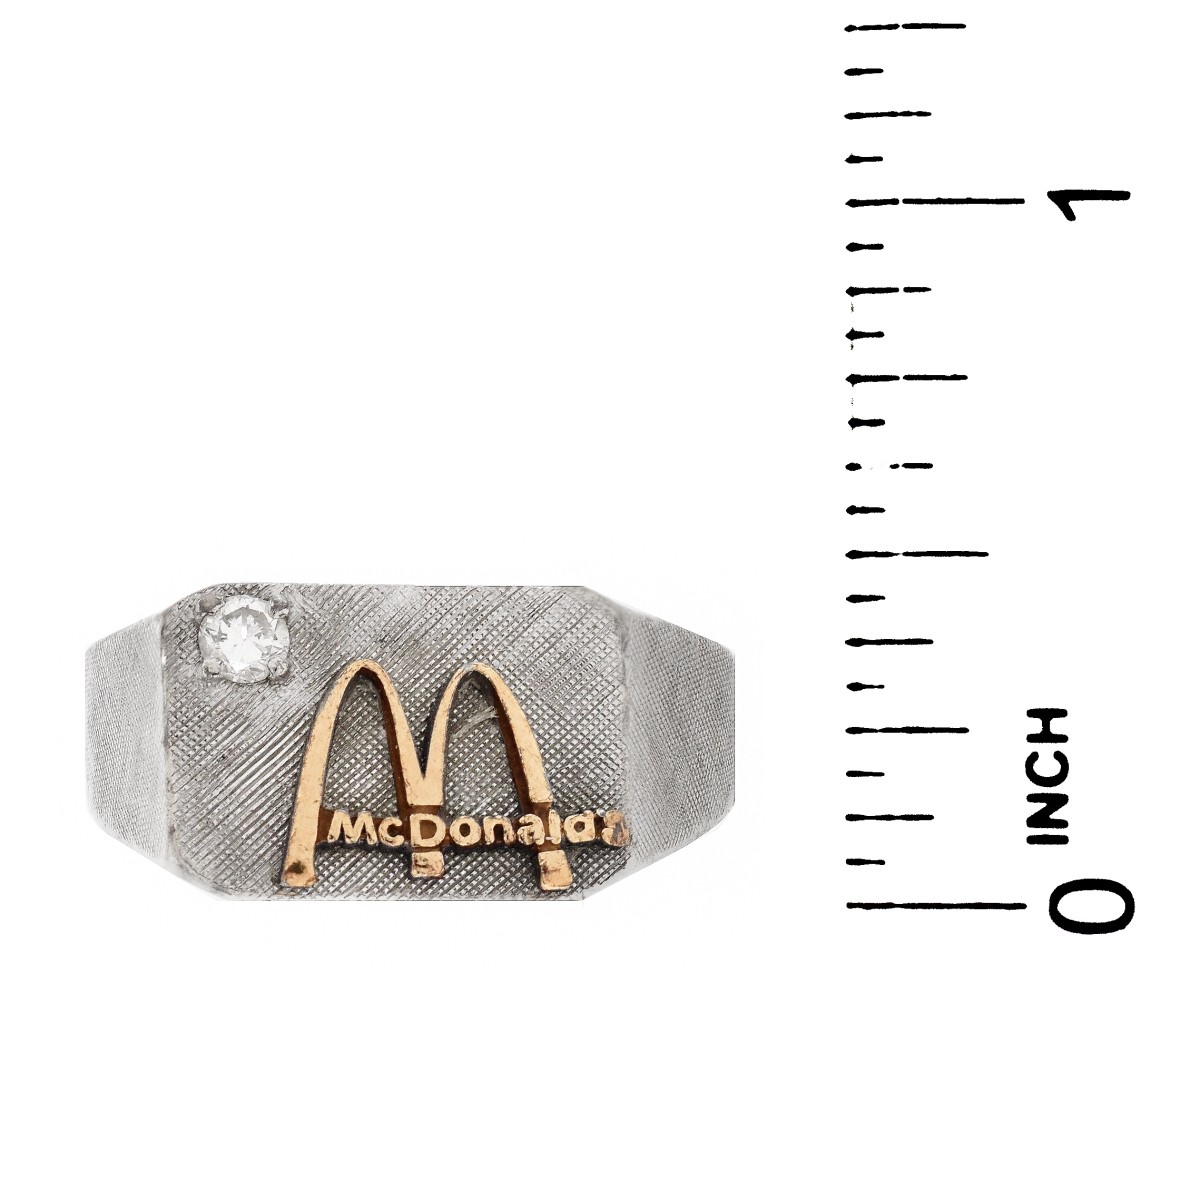 Vintage McDonald's 10K Ten Year Service Ring